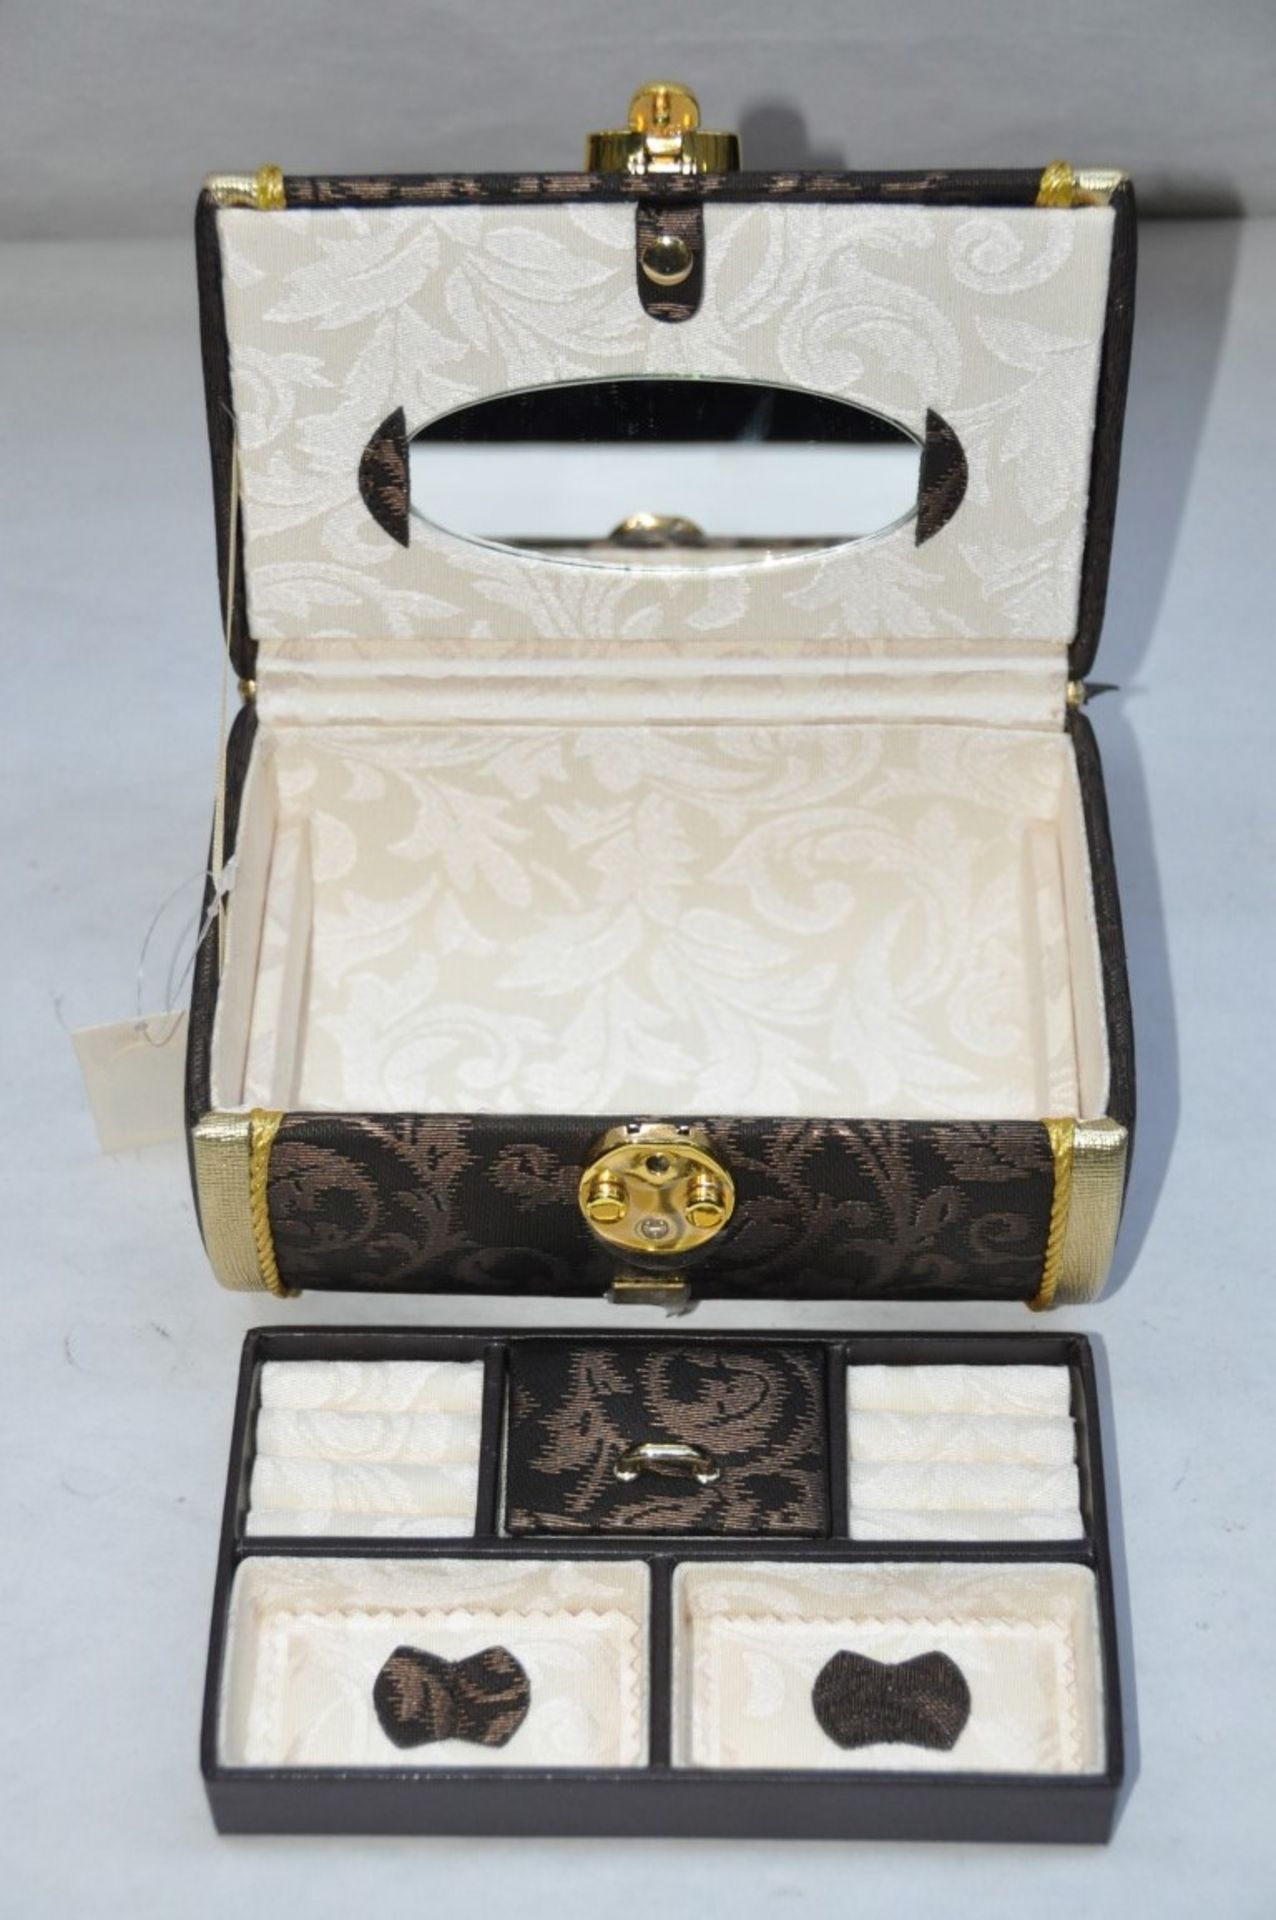 1 x "AB Collezioni" Italian Luxury Travelling Jewellery Box (34234M) - Ref LT065 – Lockable, With - Image 4 of 5